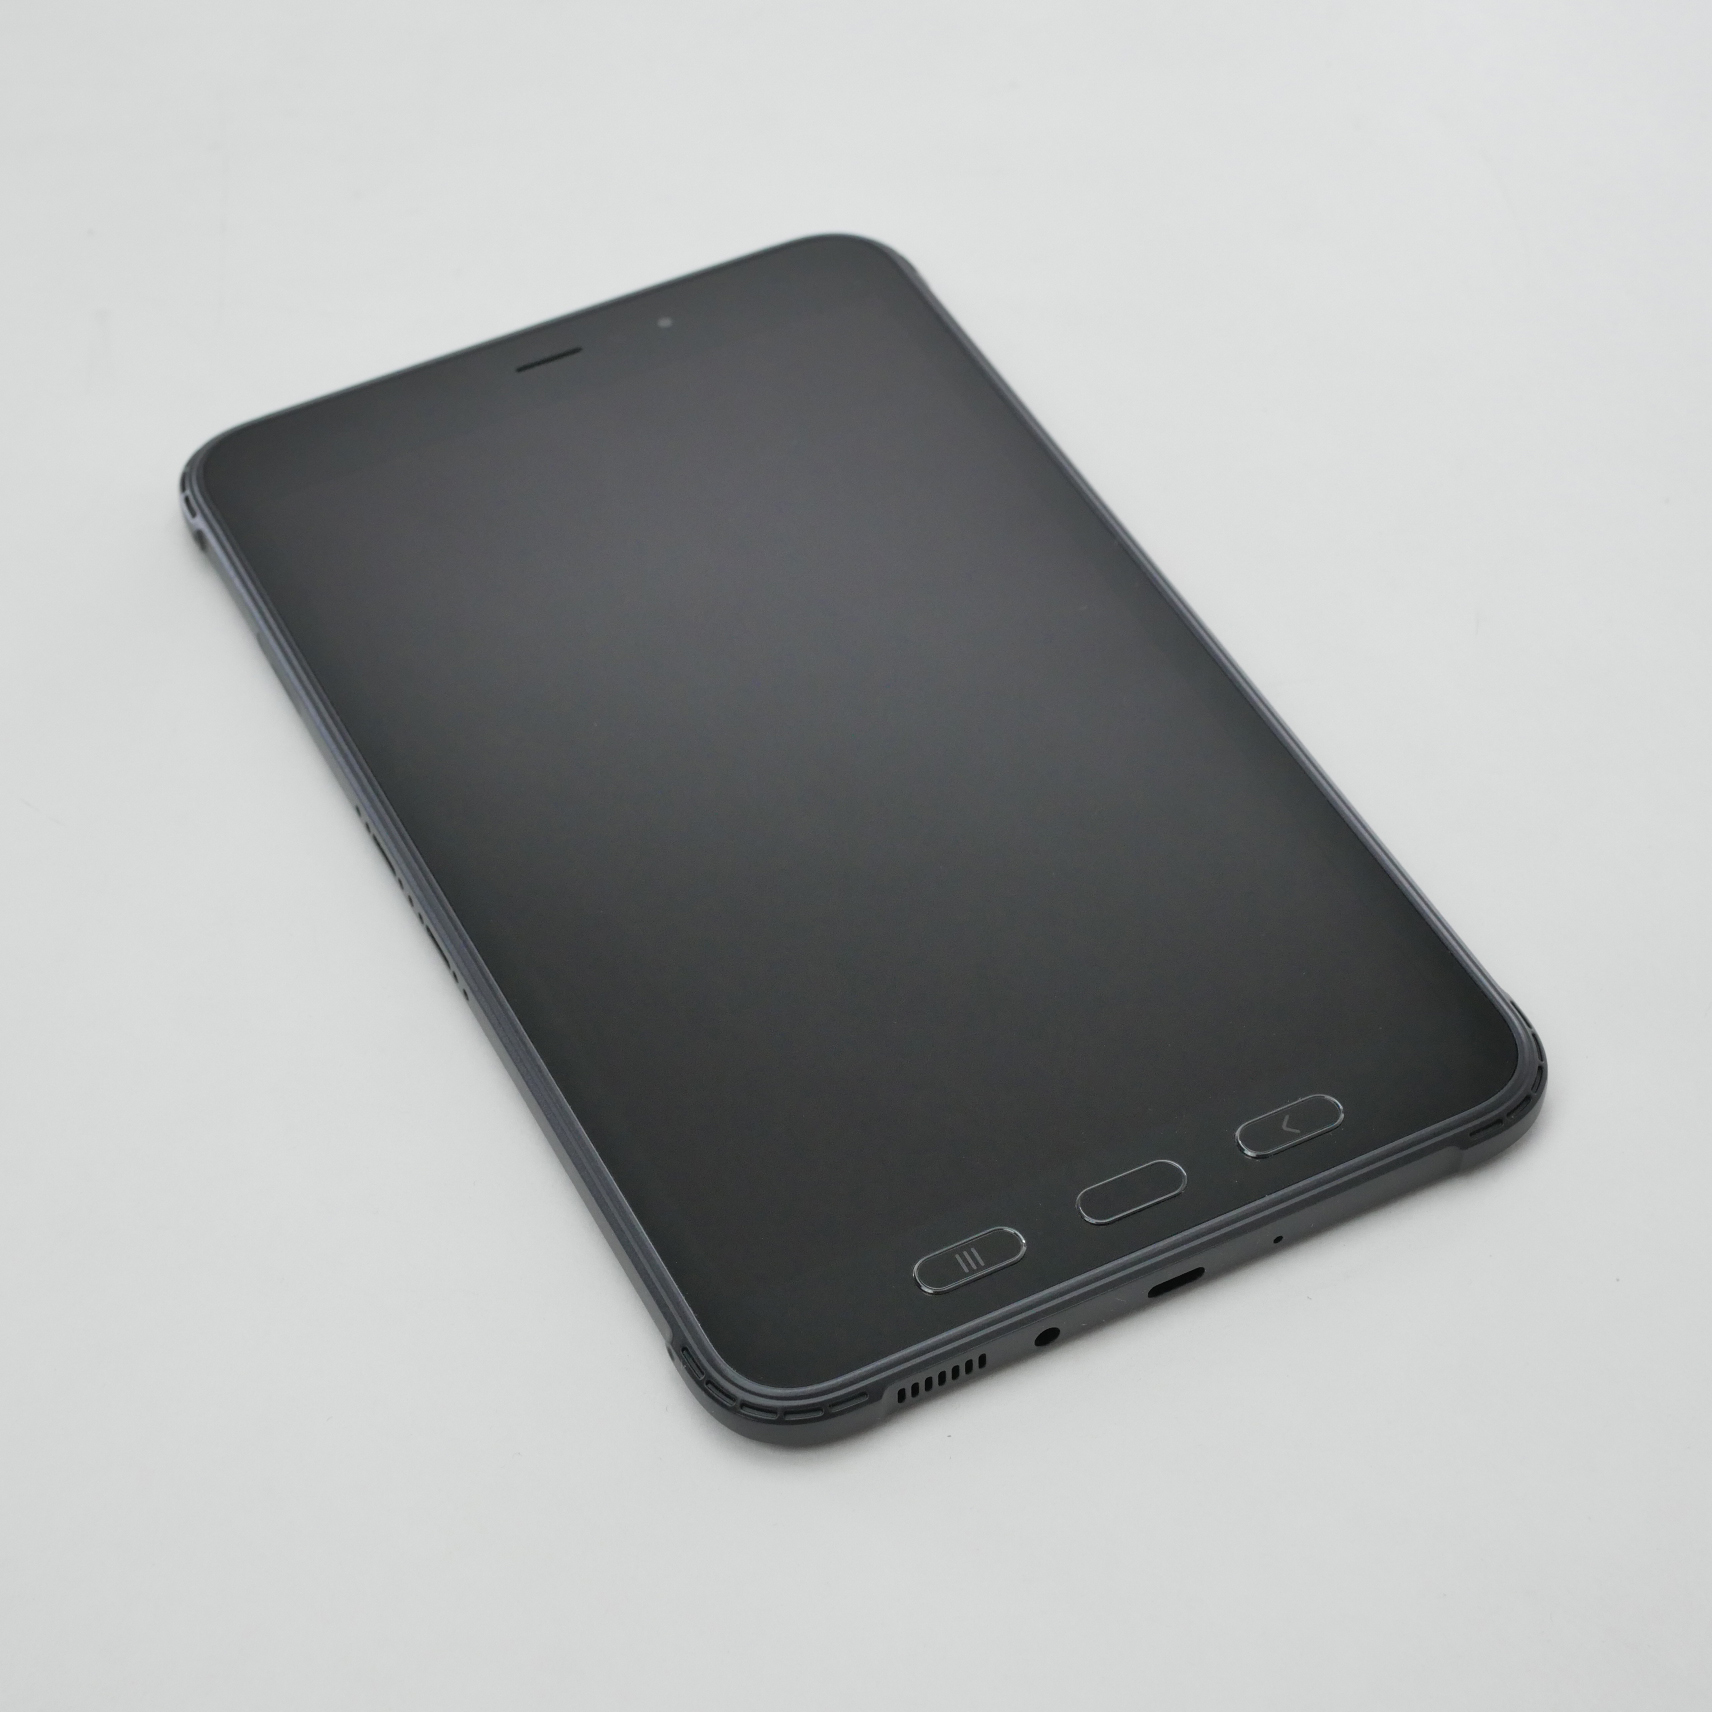 Samsung Galaxy Tab Active 3 8.0" Wi-Fi LTE Black 64GB SM-T577U/DS SM-T577UZKDN14 - Click Image to Close